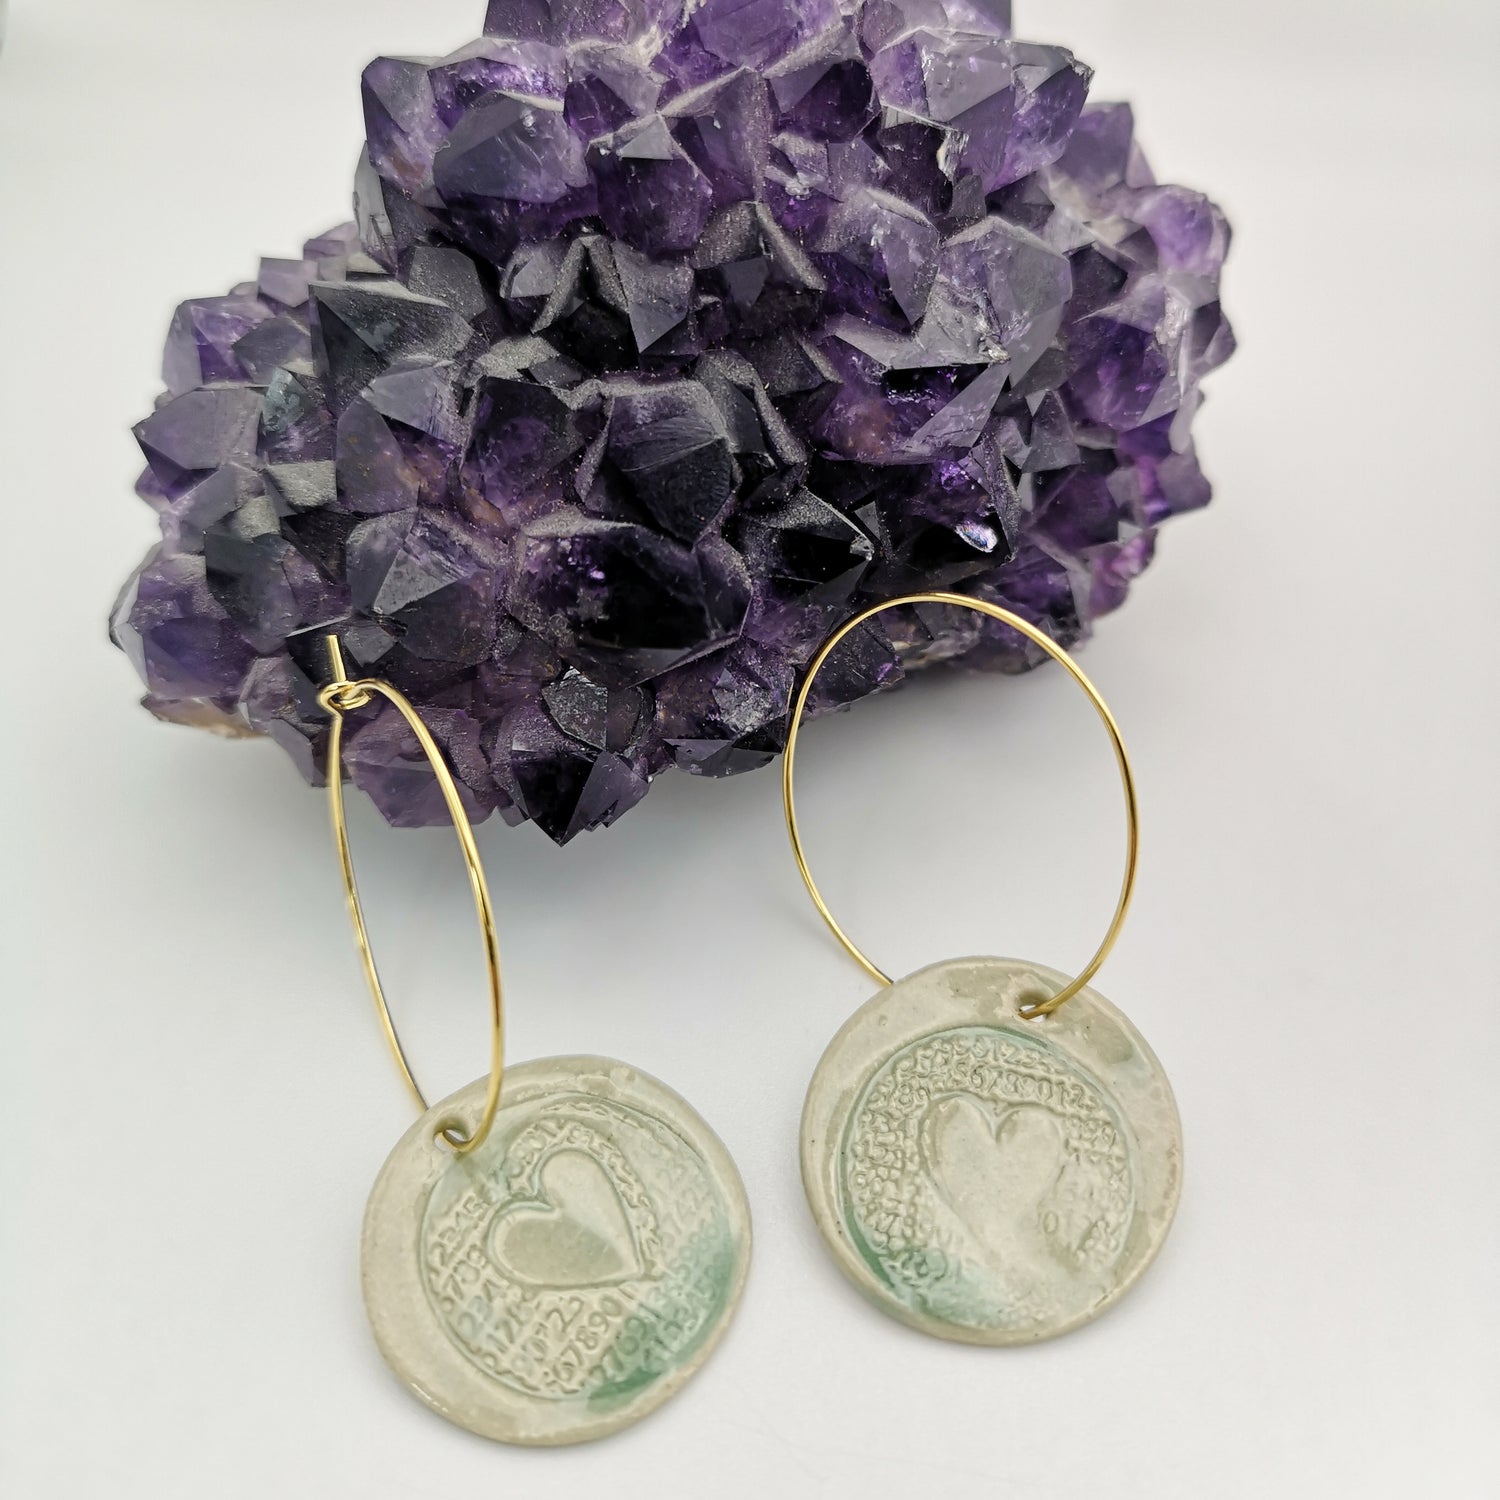 Boucles d'oreilles vert celadon medaille coeur graver or pendante pour femme avec ametiste made in france handmade